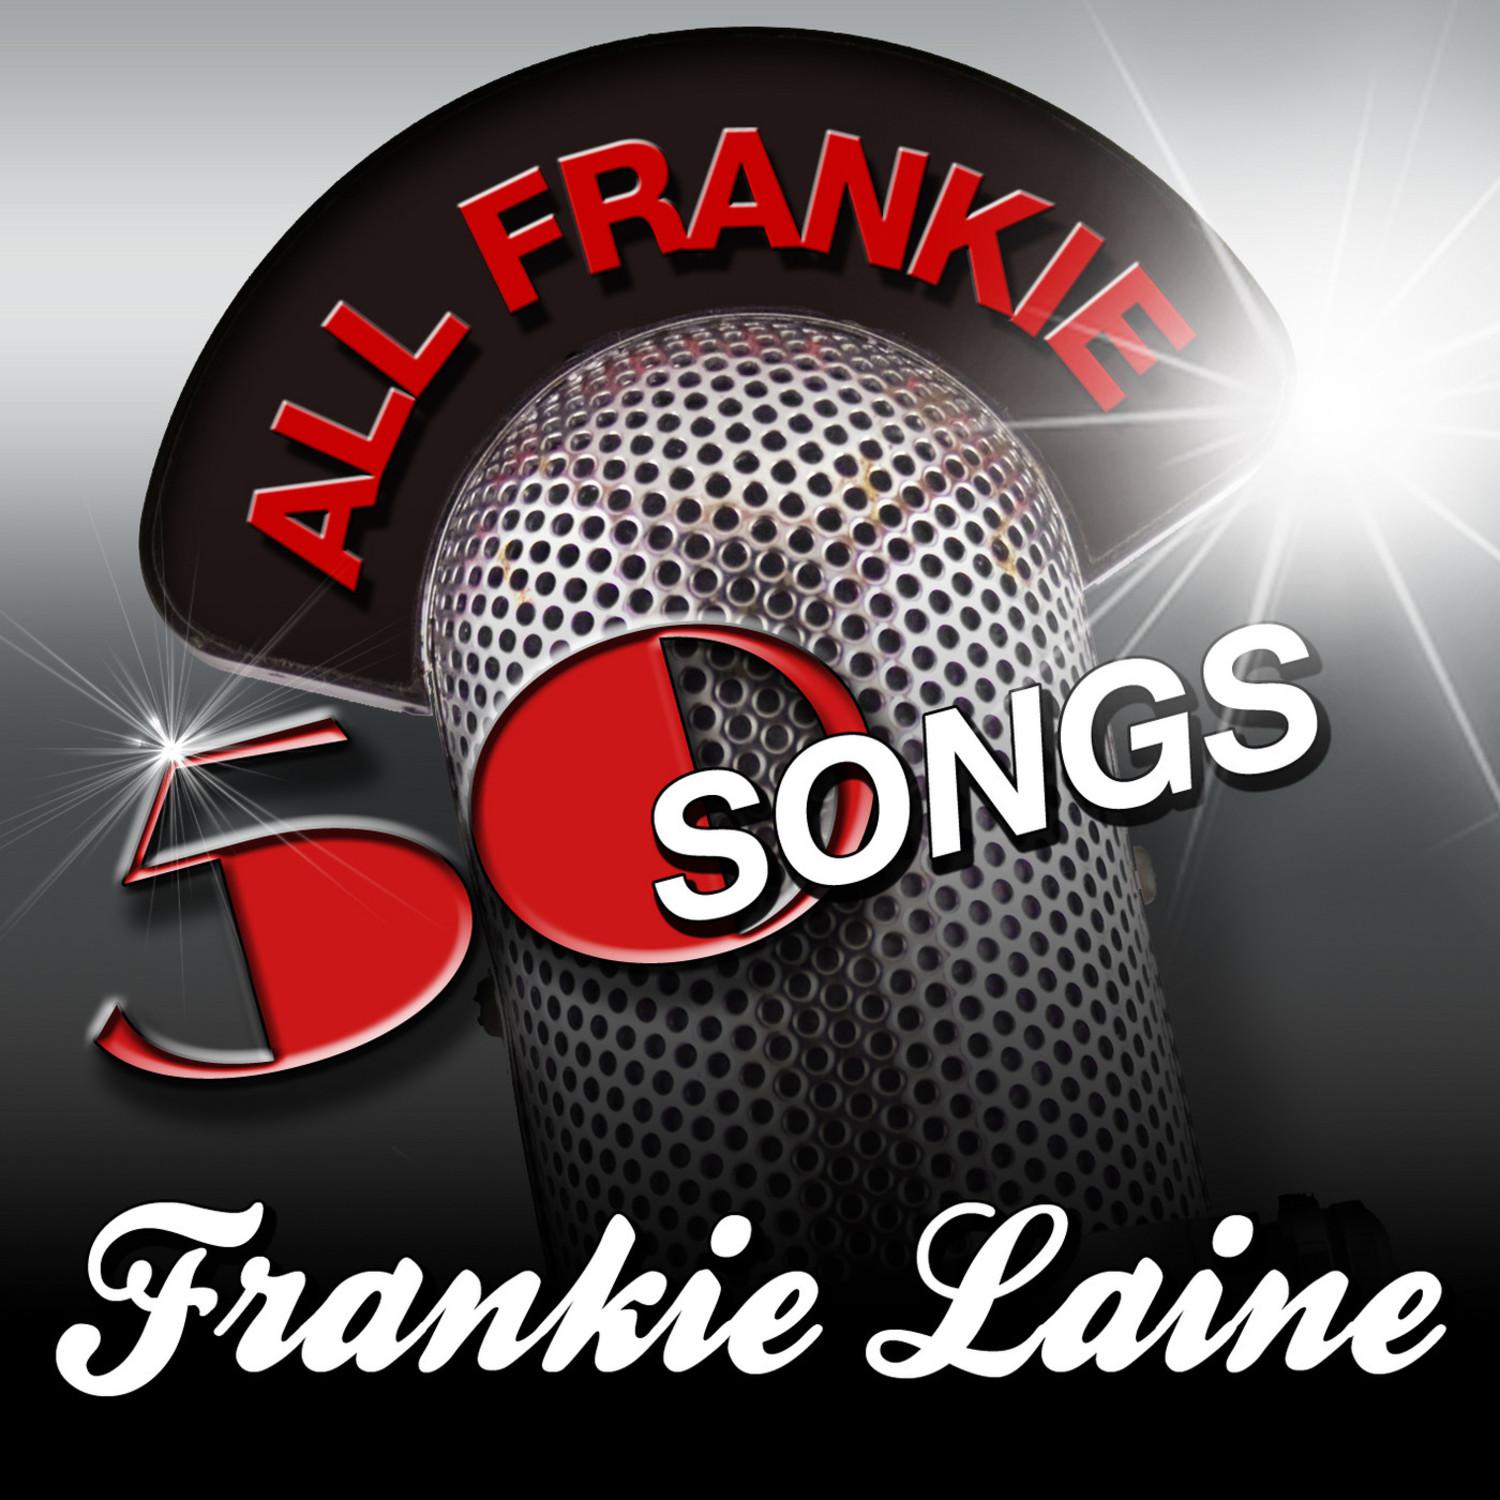 All Frankie - 50 Songs